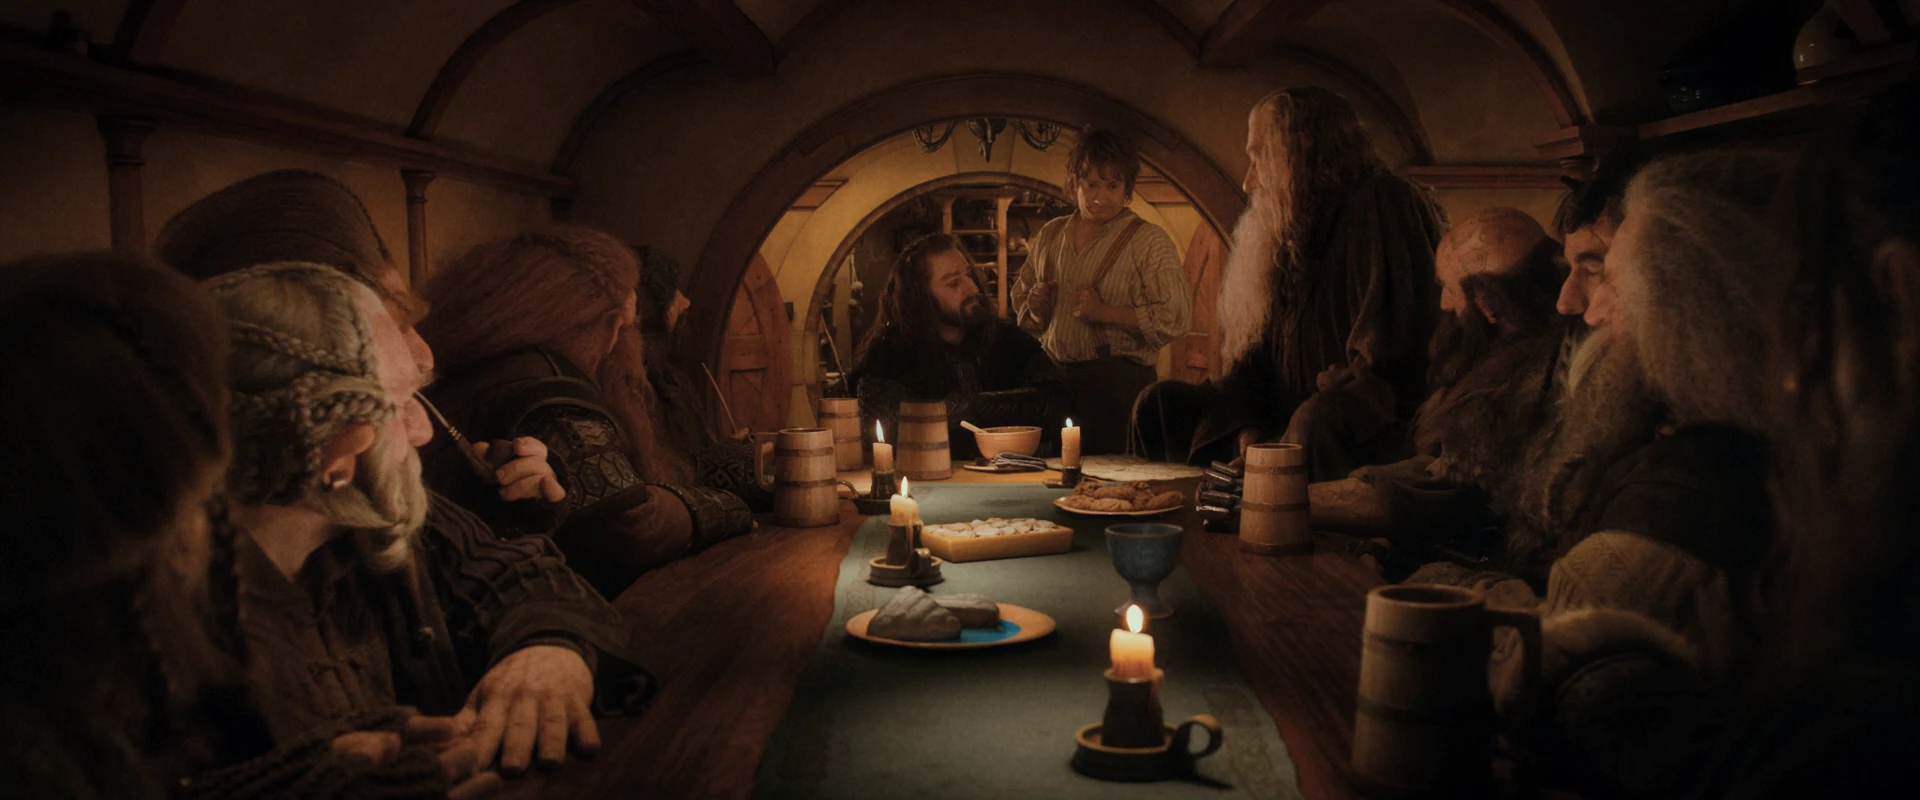 the hobbit an unexpected journey dual audio 1080p download